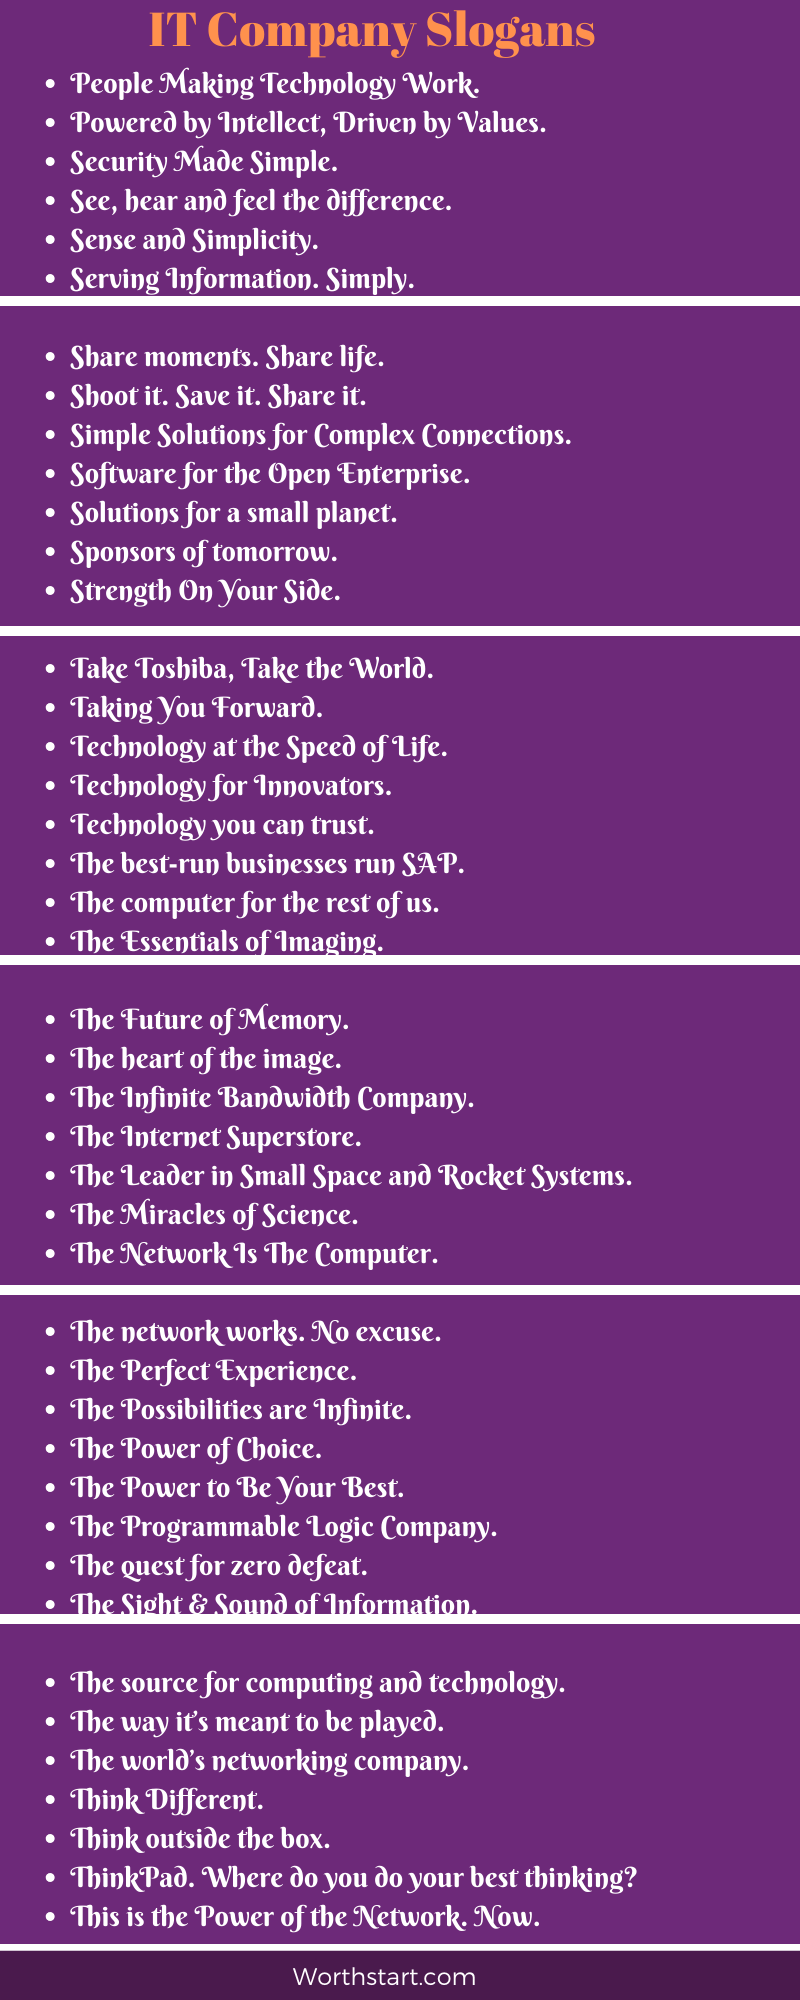 IT Company Slogans